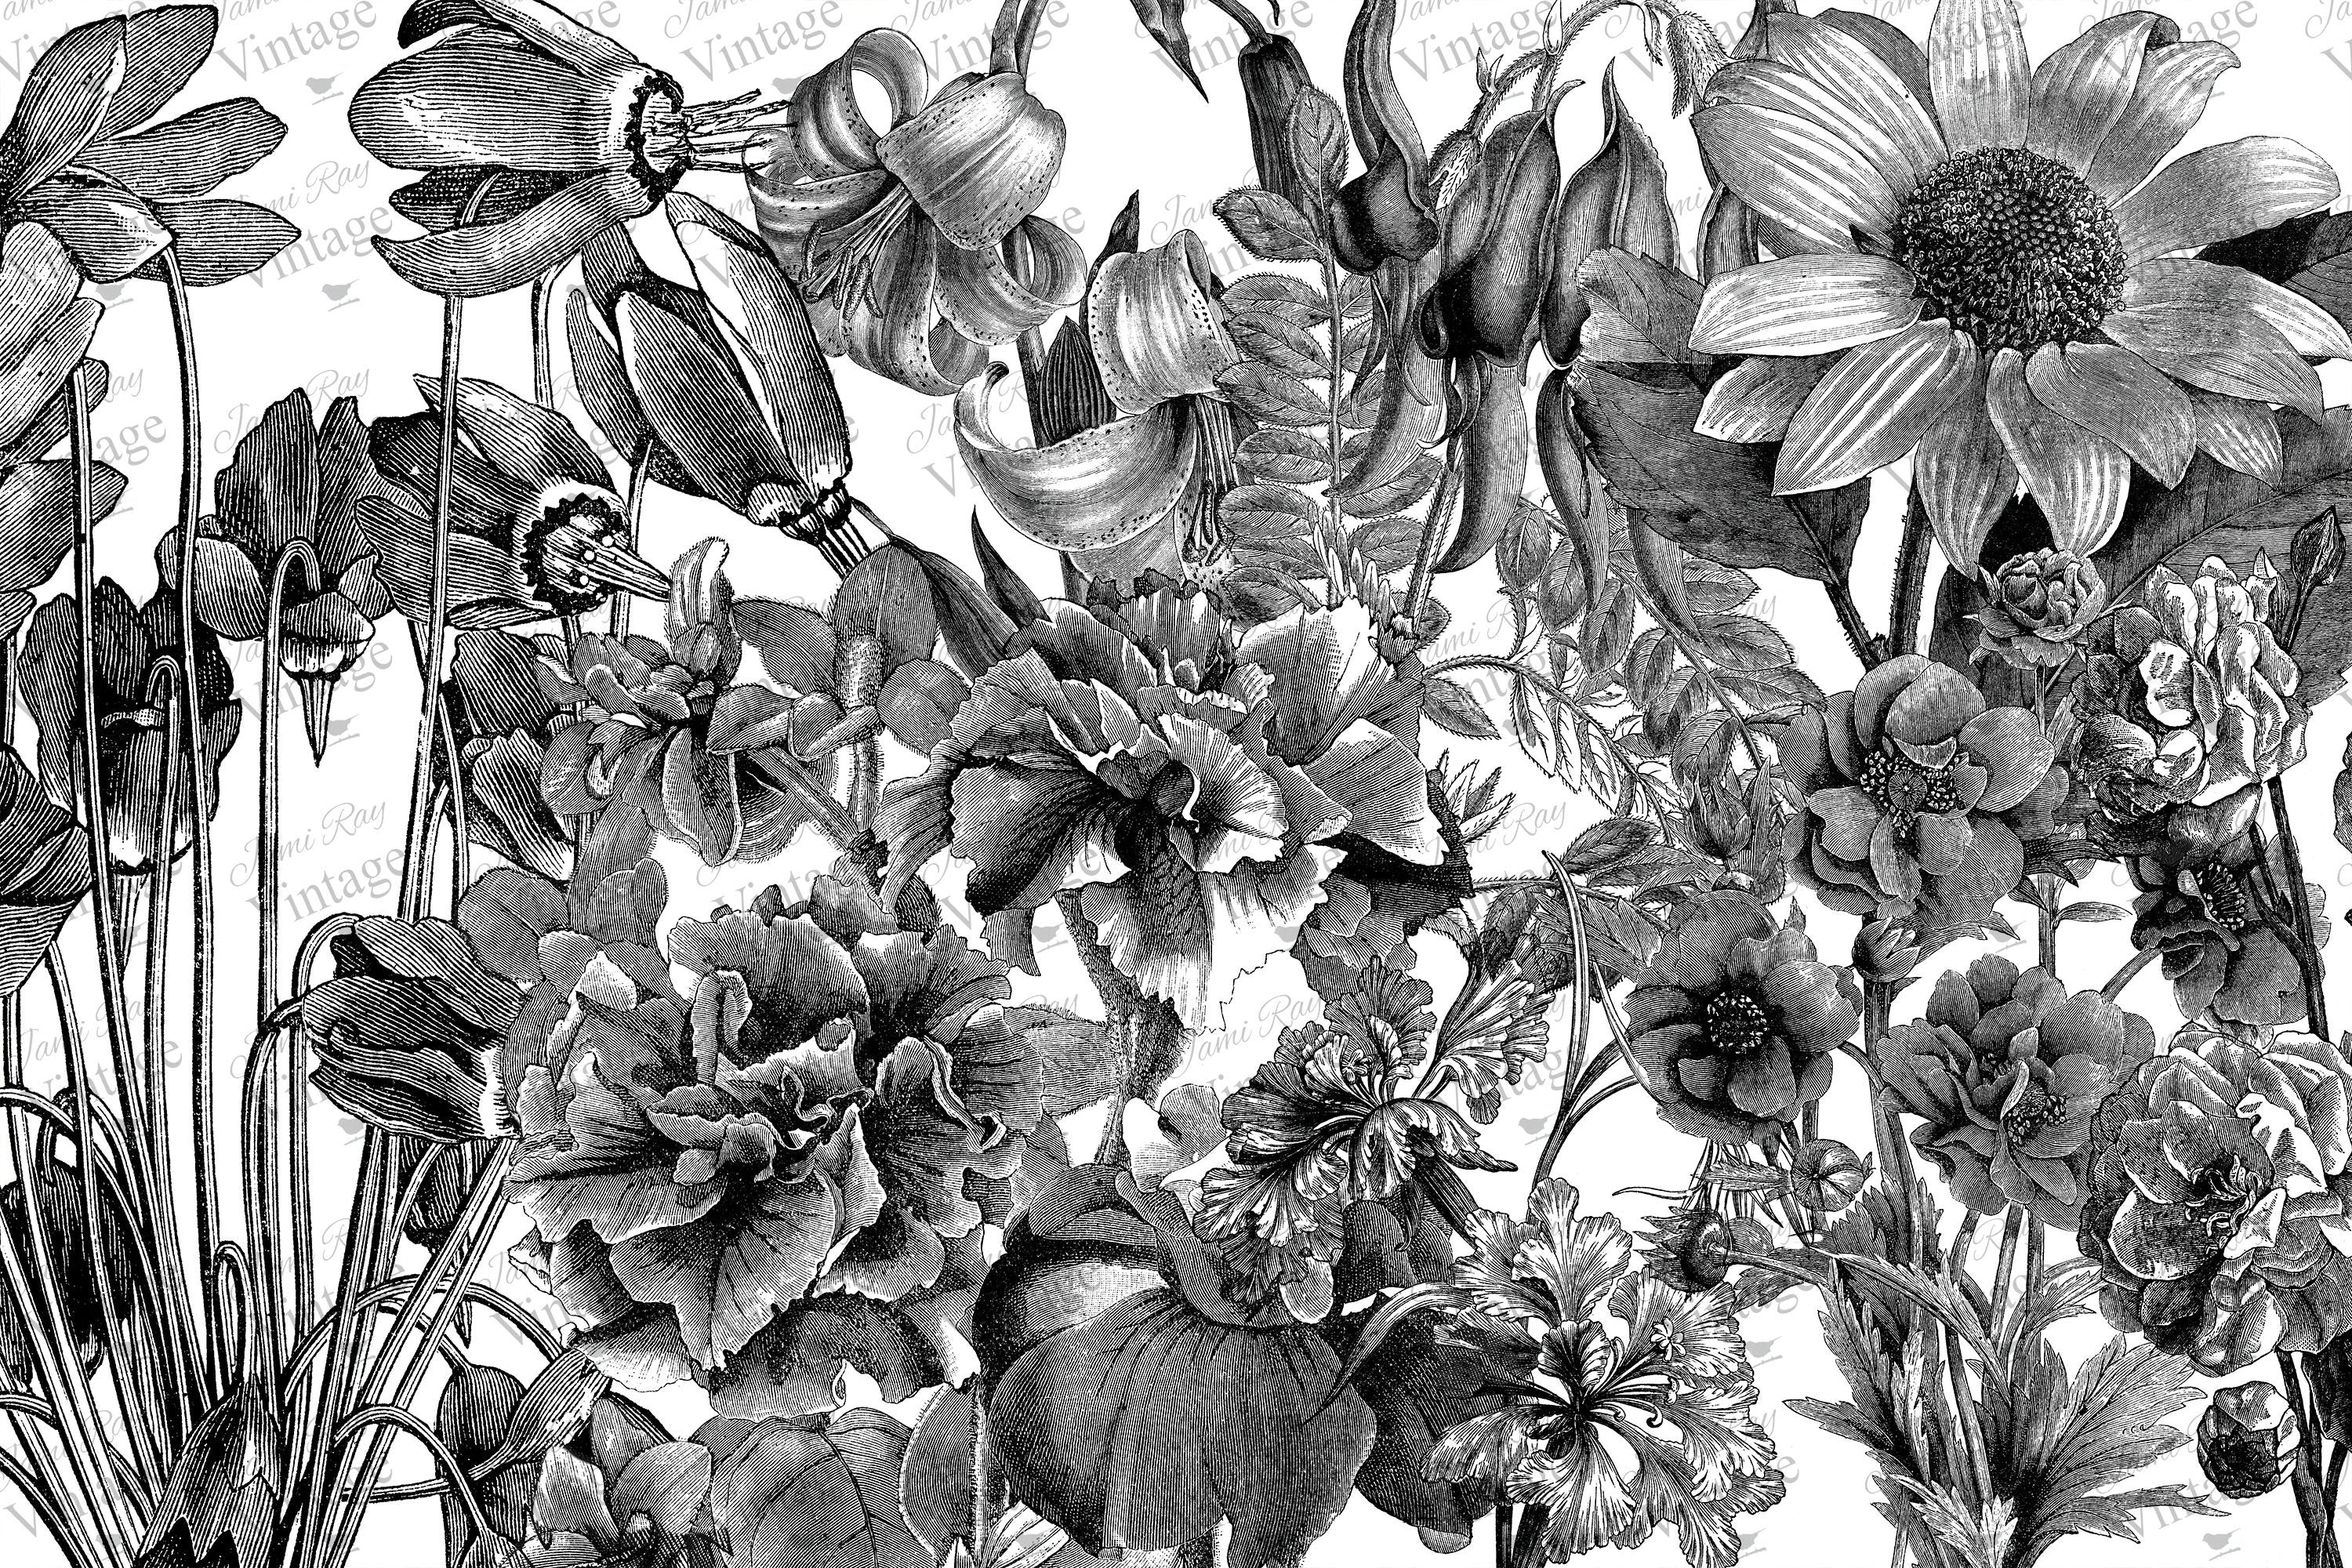 Black Floral Craft Tissue Paper